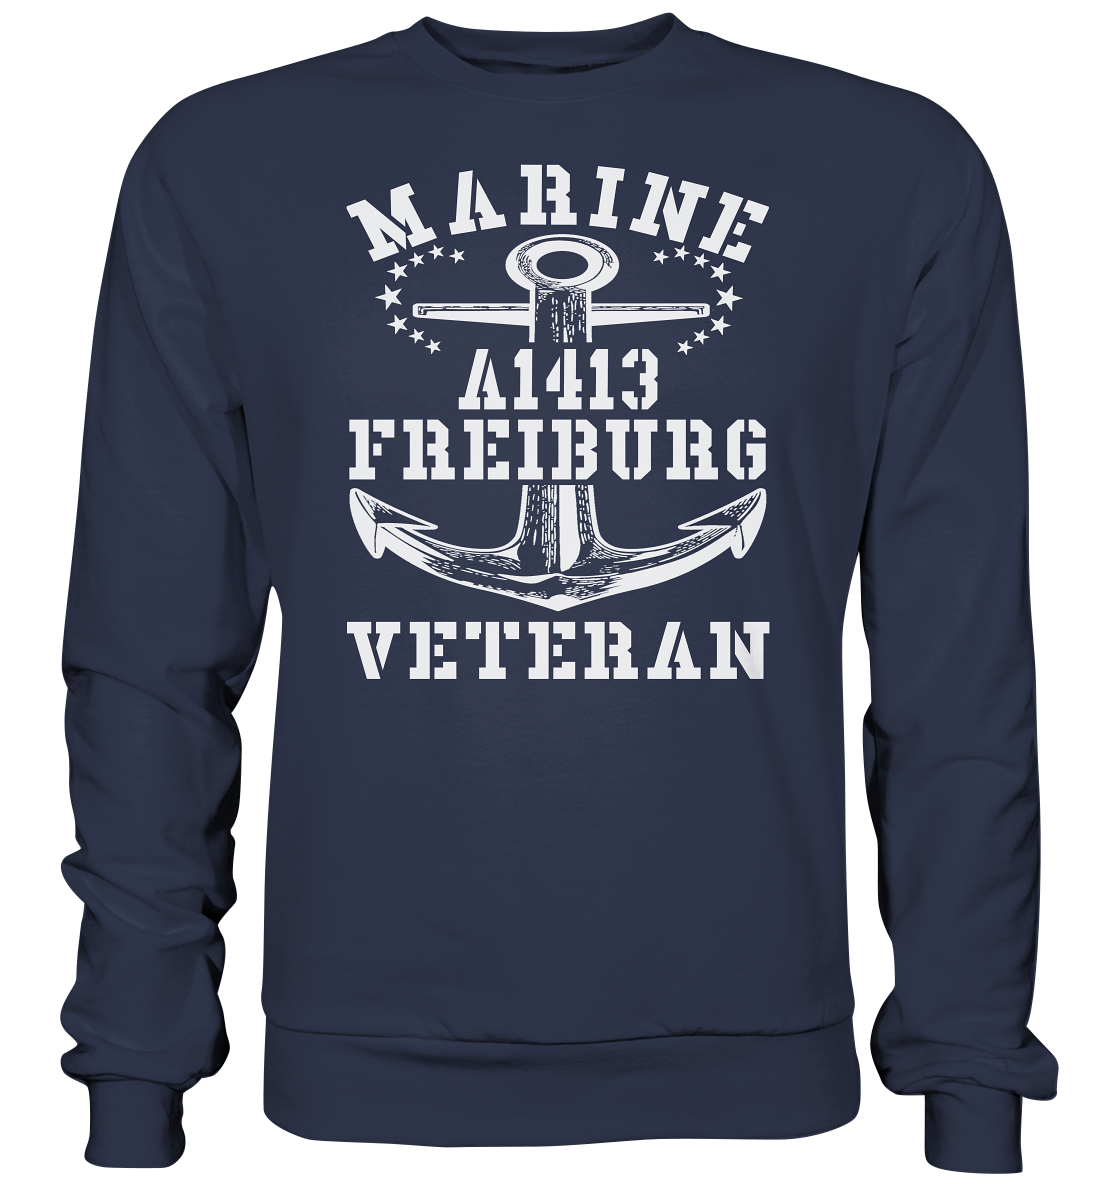 Troßschiff A1413 FREIBURG Marine Veteran - Premium Sweatshirt